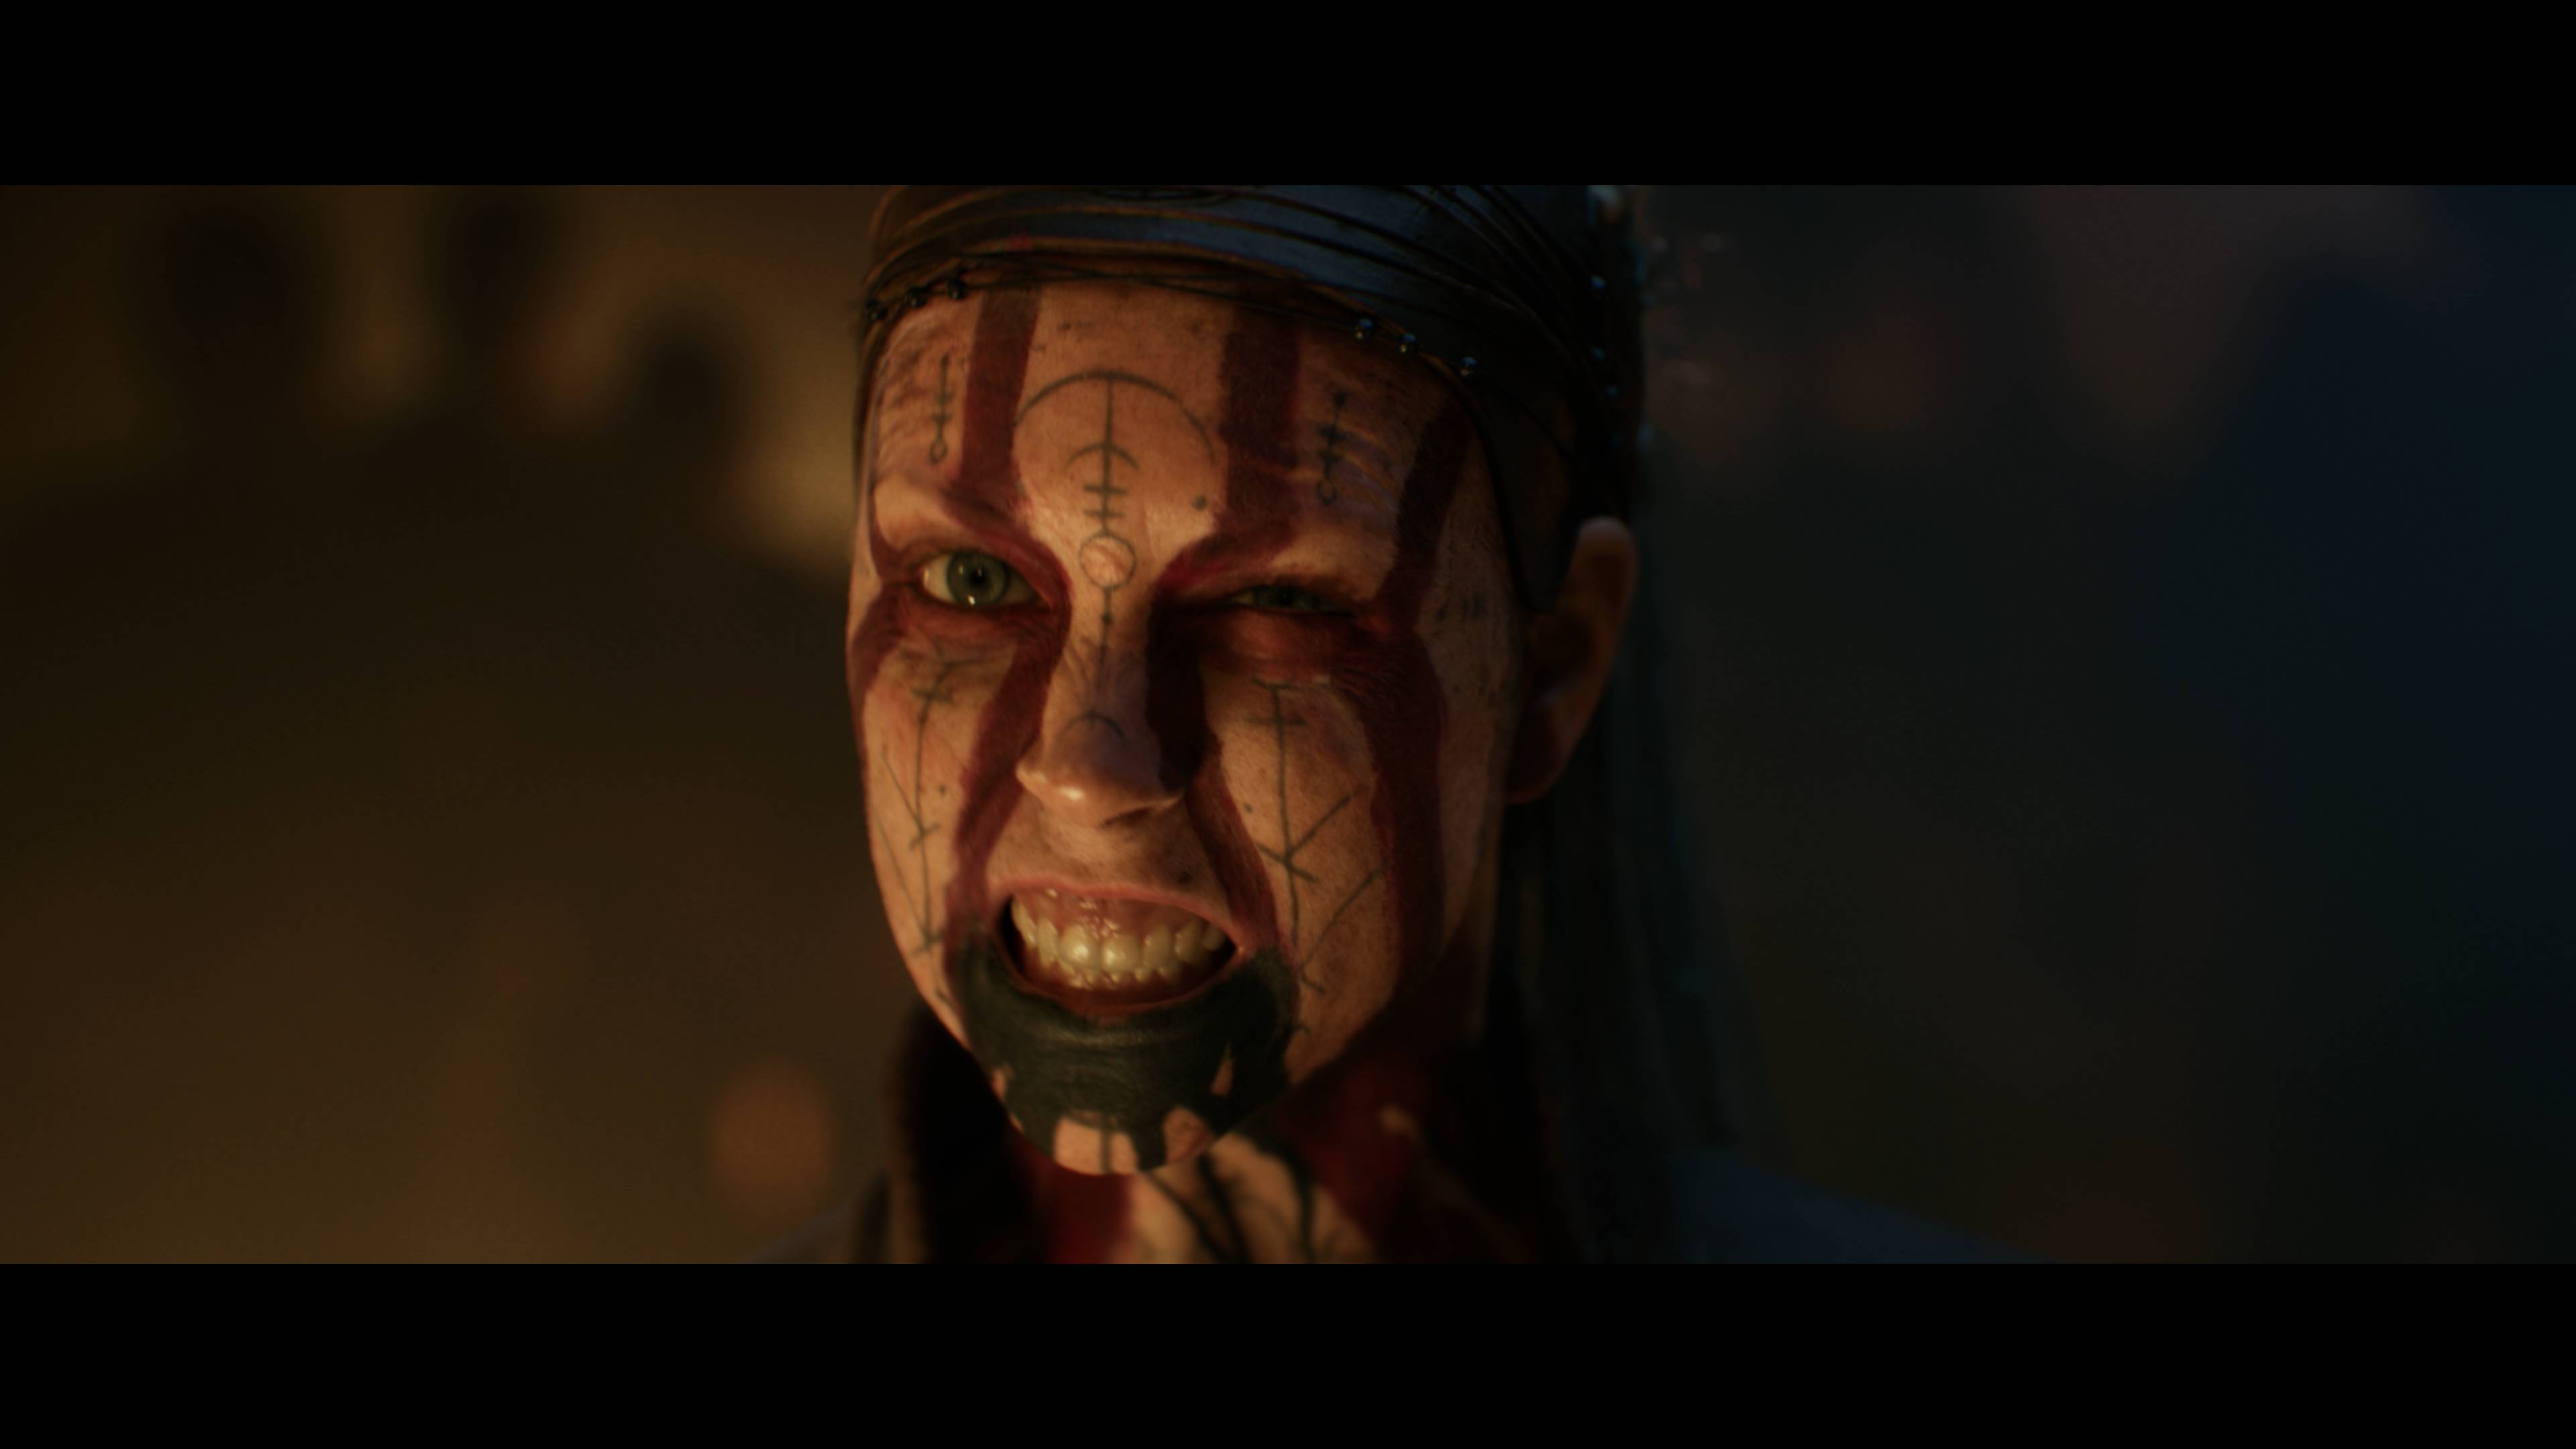 Senua's Saga: Hellblade 2's Facial Capture System Looks Incredible